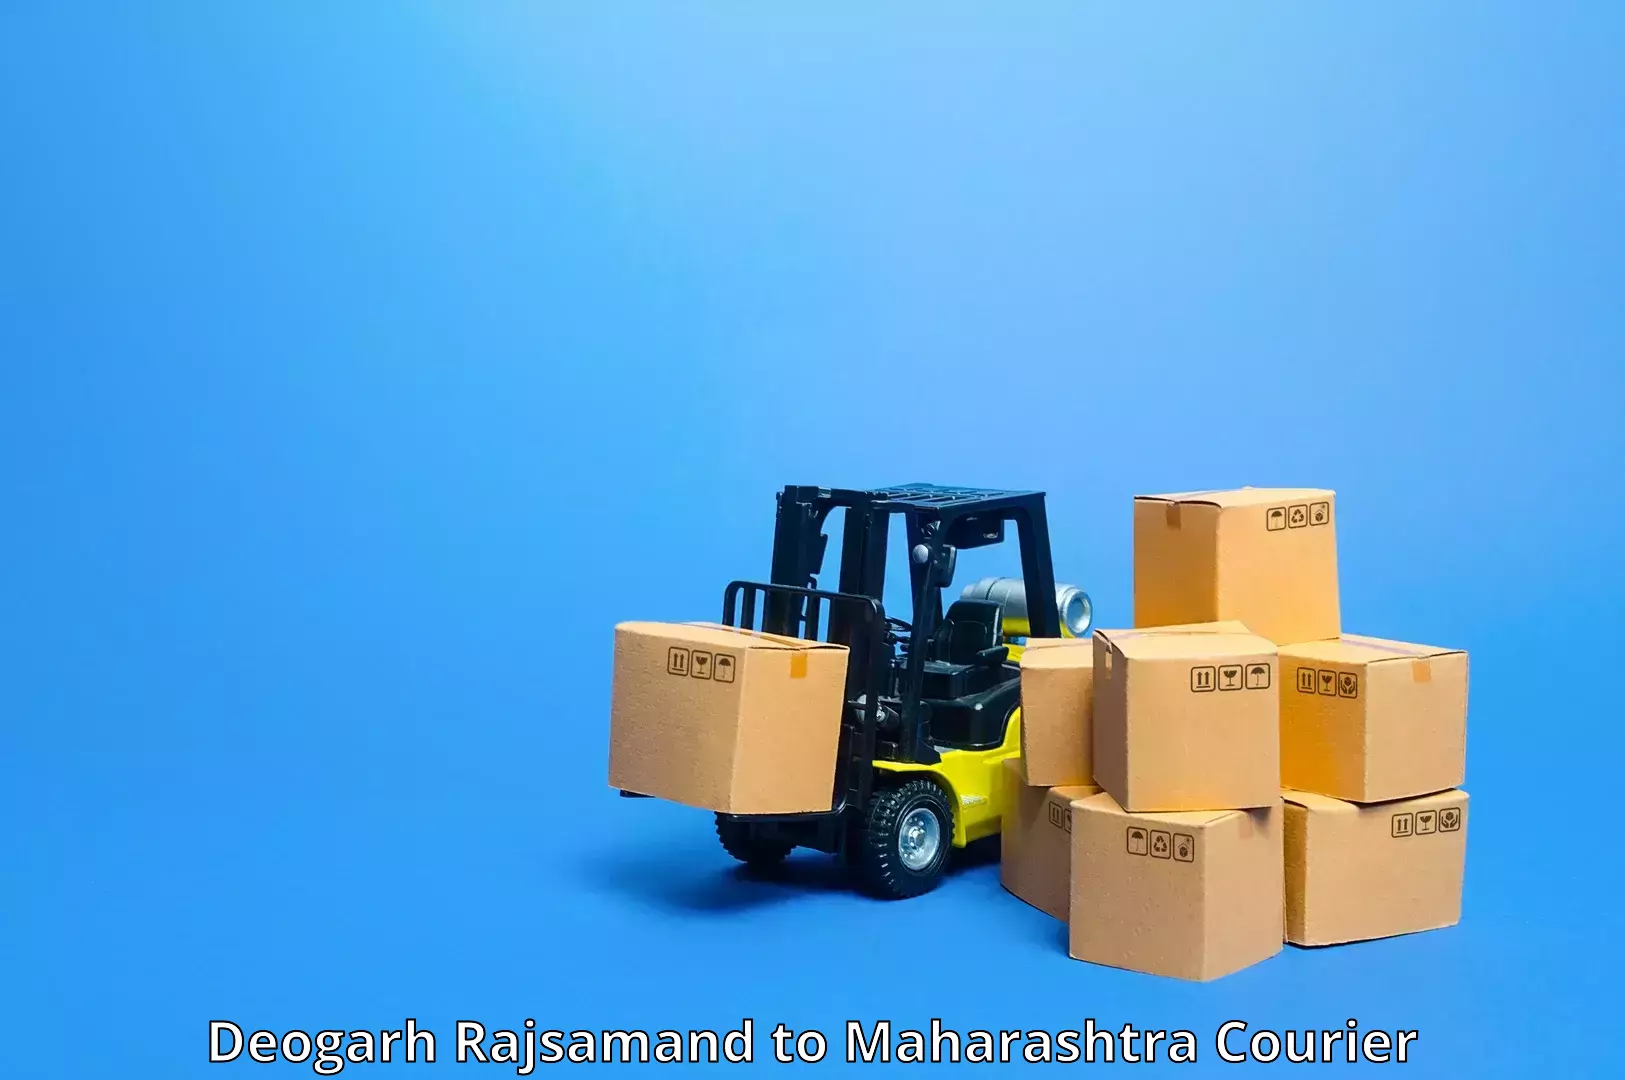 Local delivery service Deogarh Rajsamand to Navi Mumbai